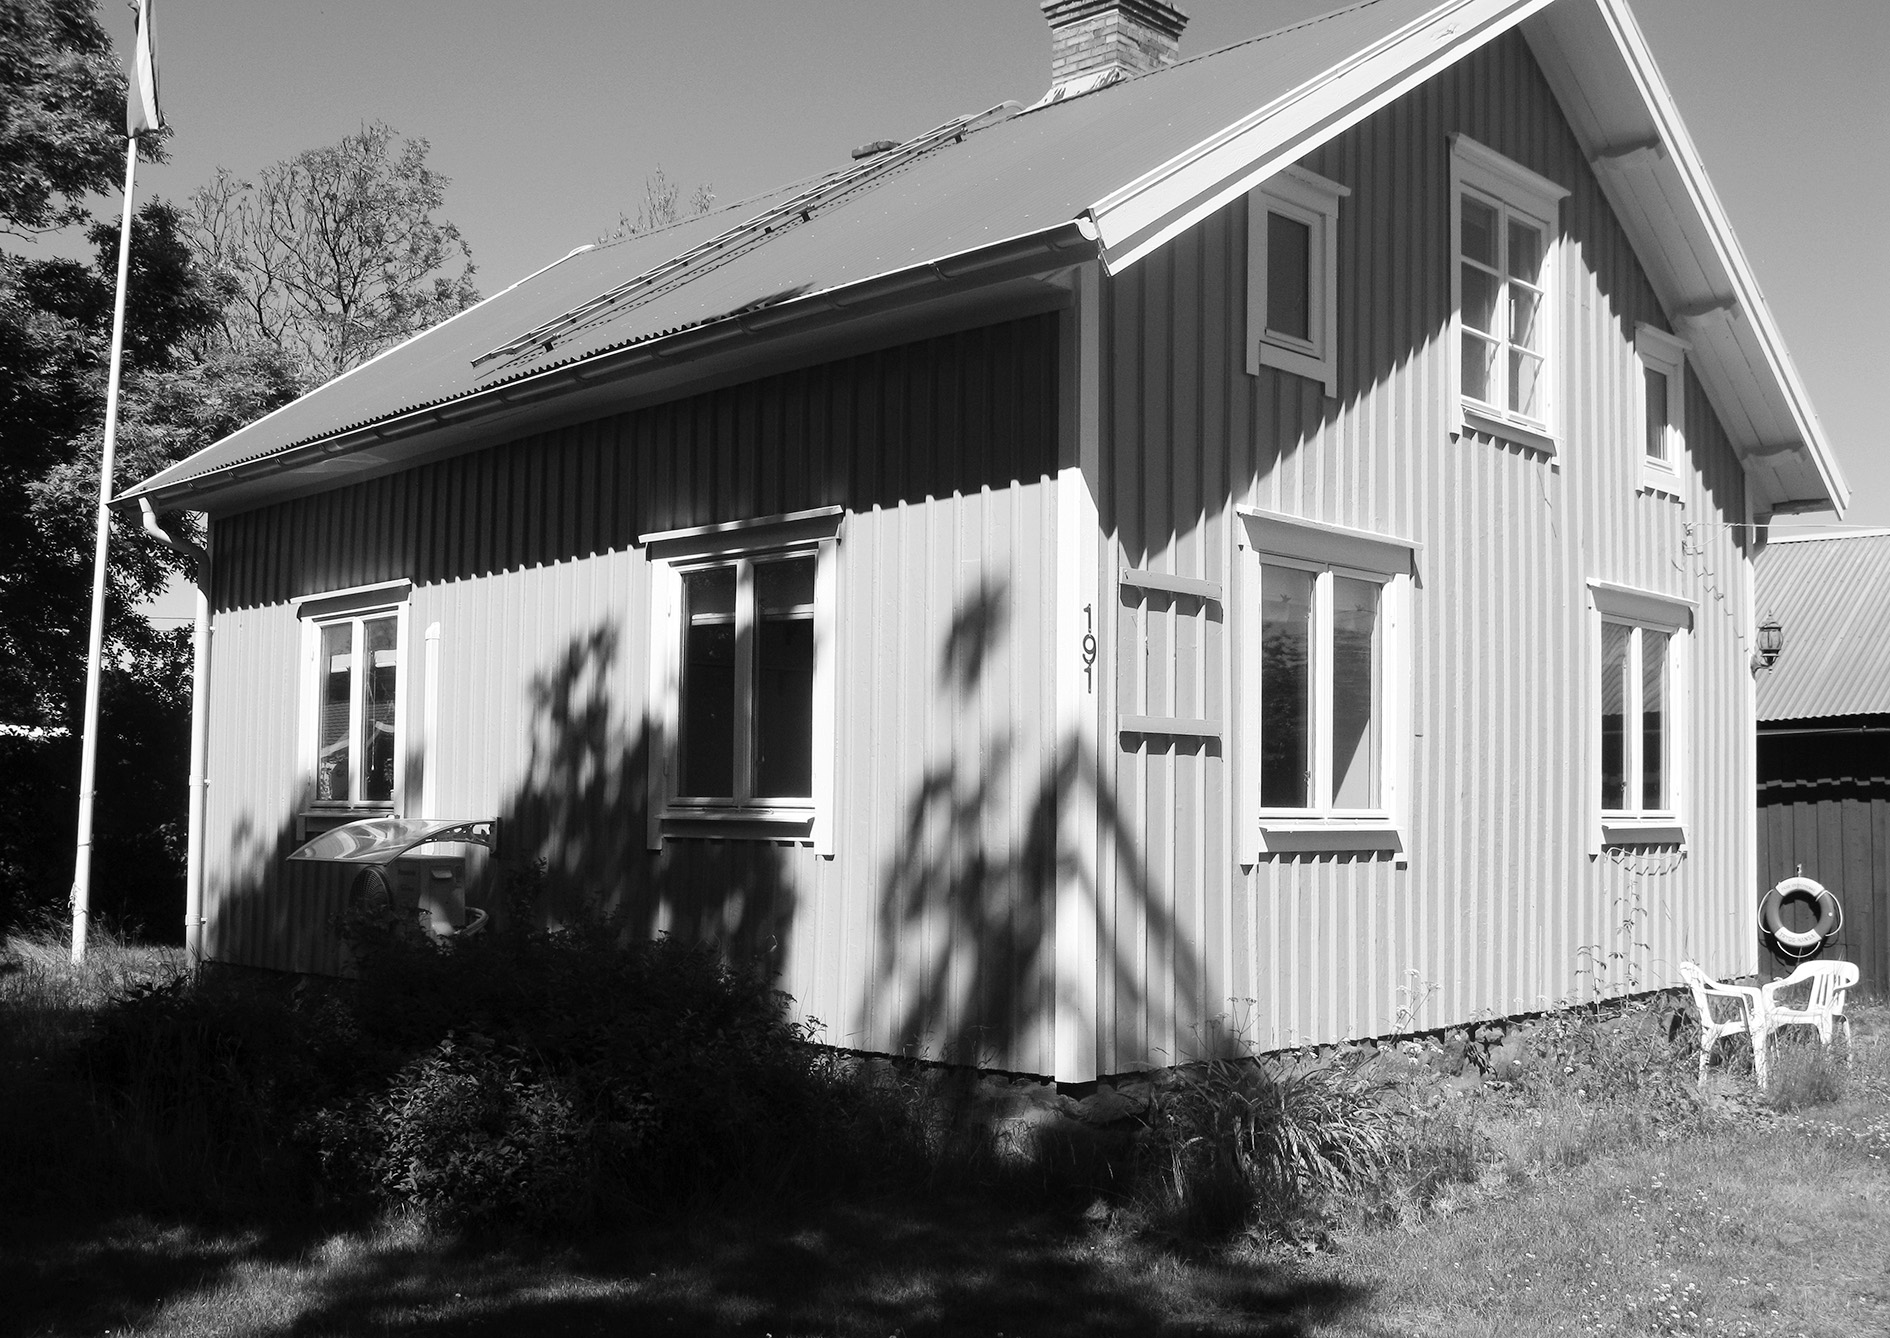 The farmhouse where Elizabeth Stride was born, Stora Tumlehed, in Sweden.